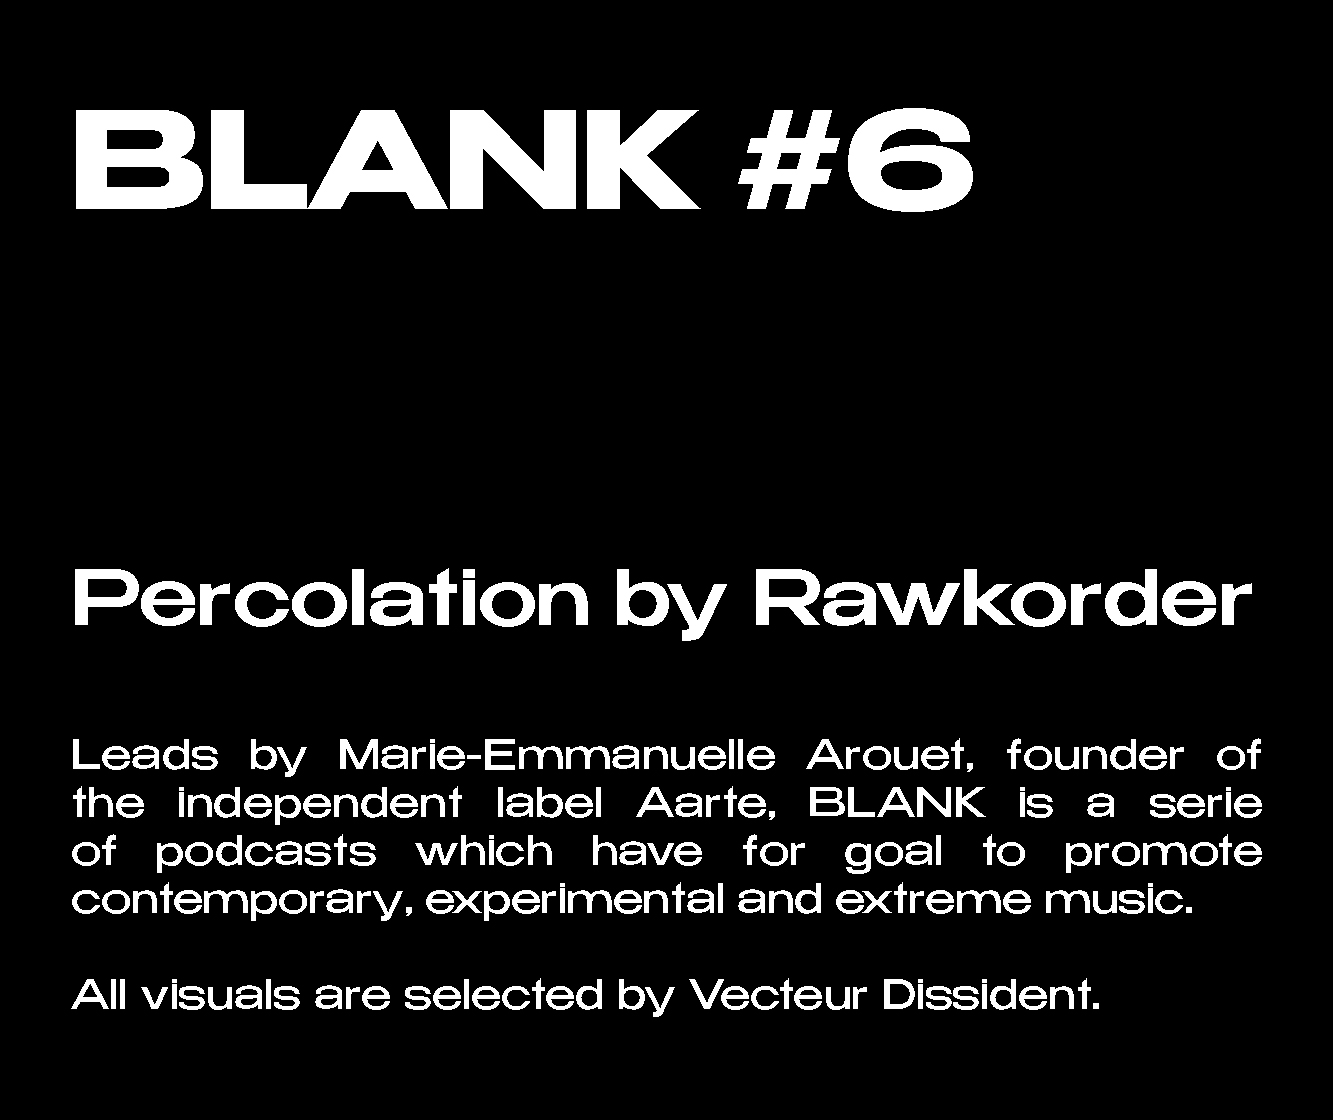 BLANK #6 - PERCOLATION - RAWKORDER